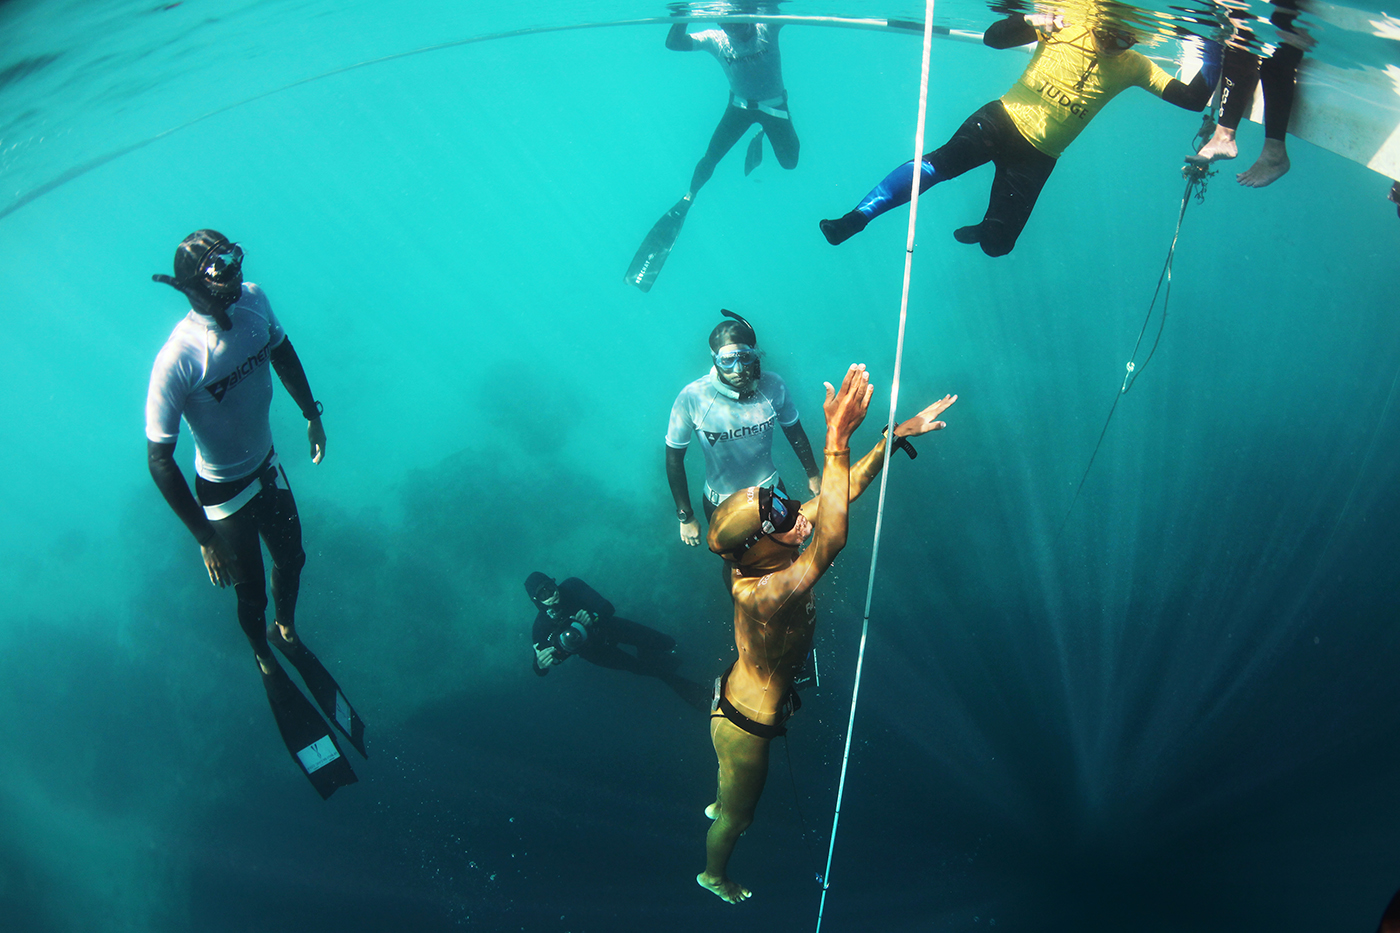 Vertical Blue Freediving photo Logan Mock-Bunting